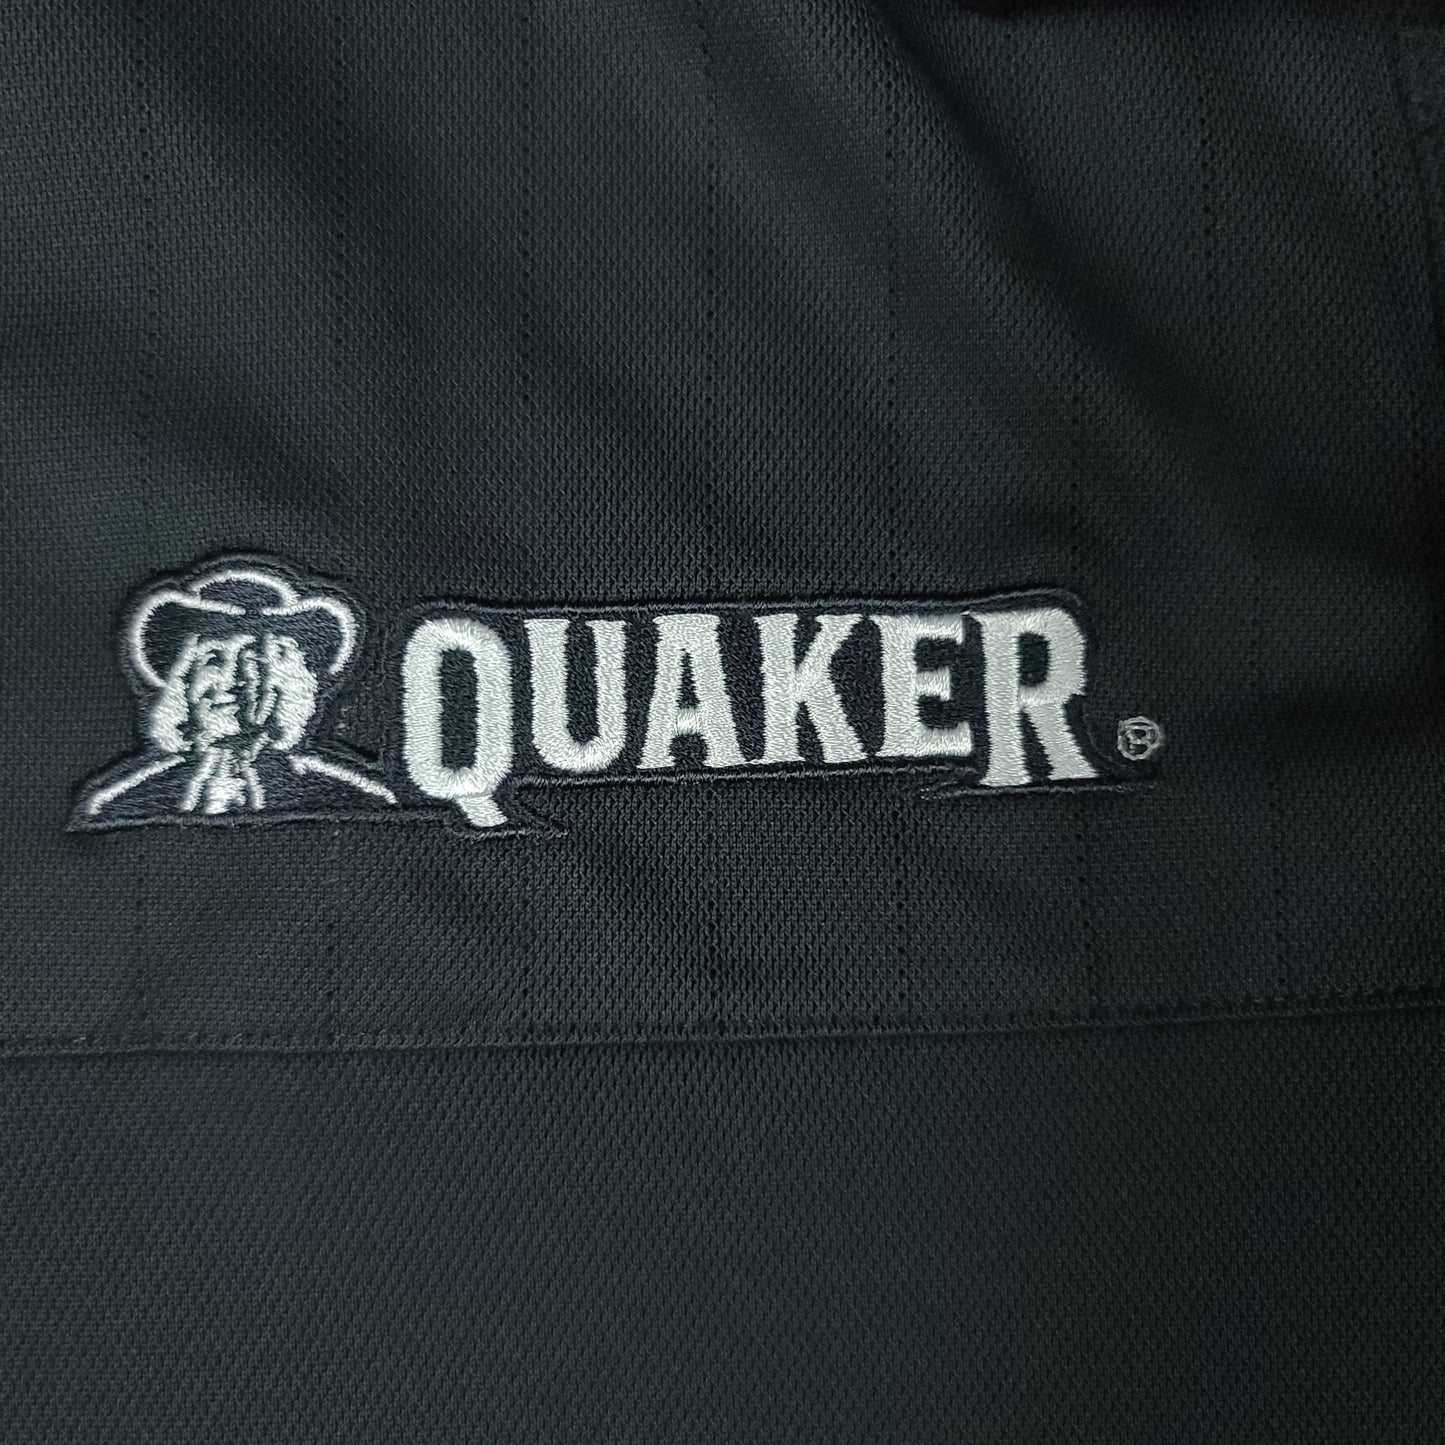 Chicago Fire adidas Navy Blue Quaker Oats Polo